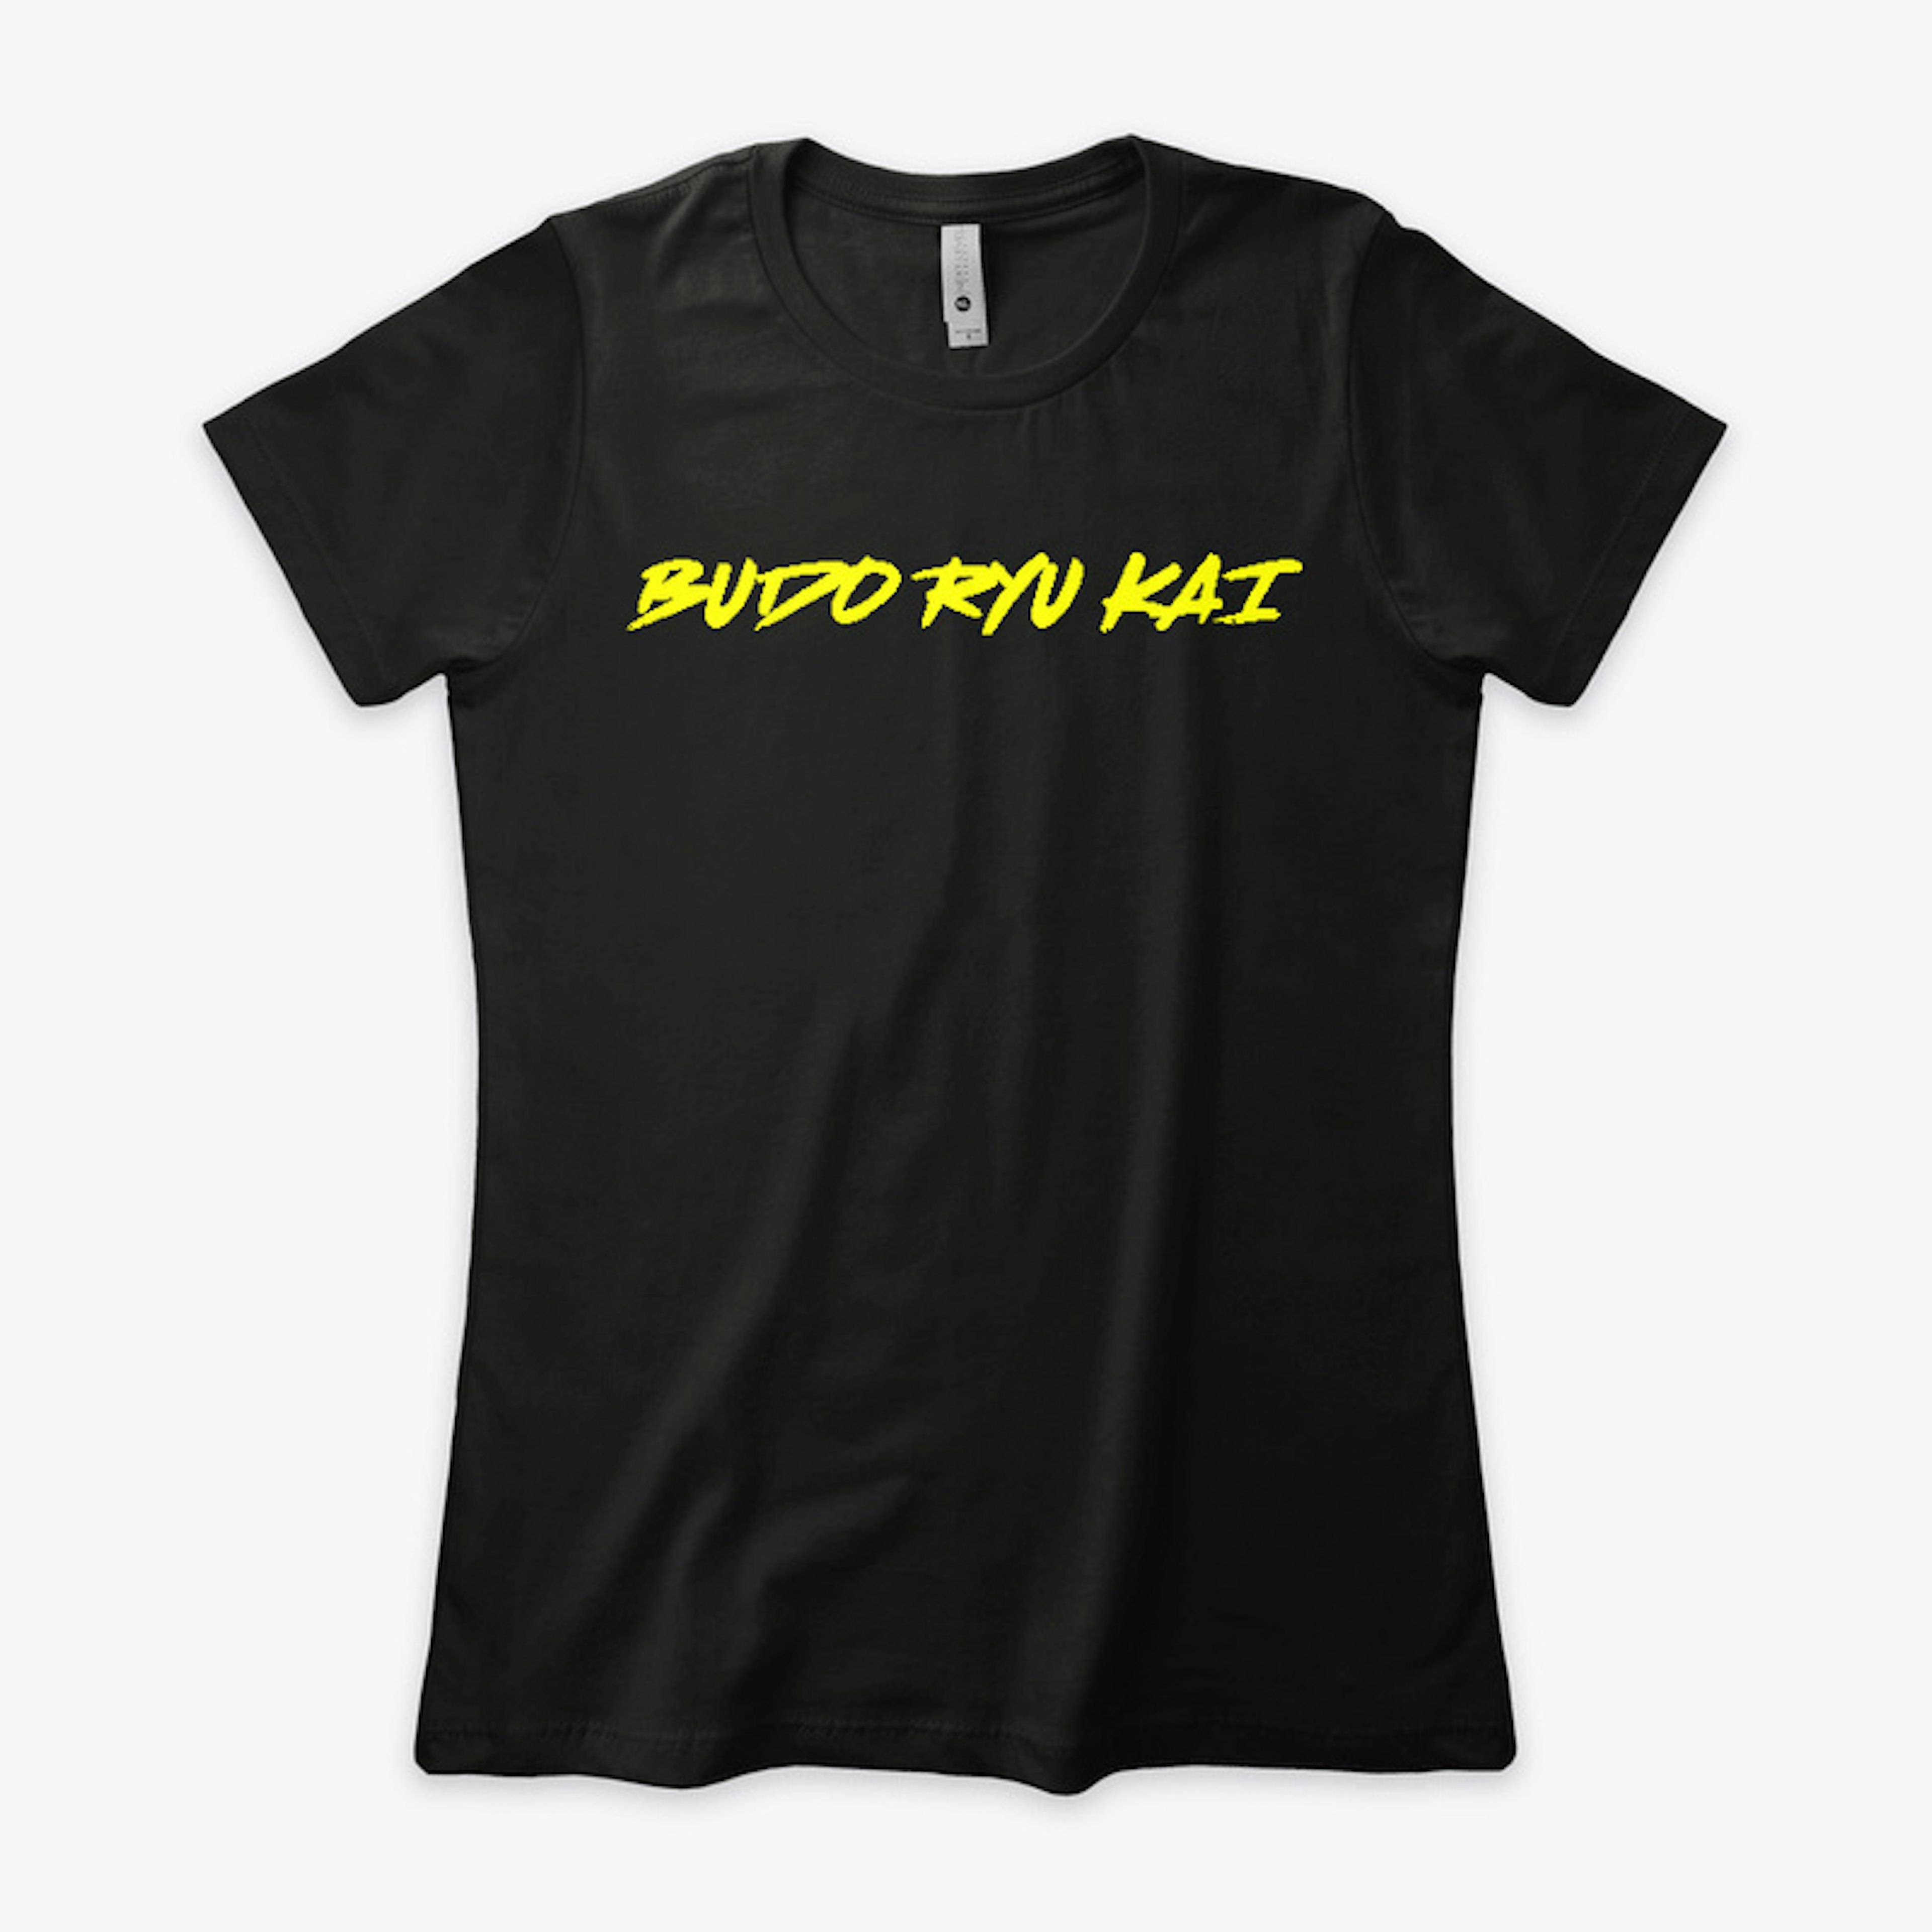 Budo Ryu Kai "Defender" Women's Shirt